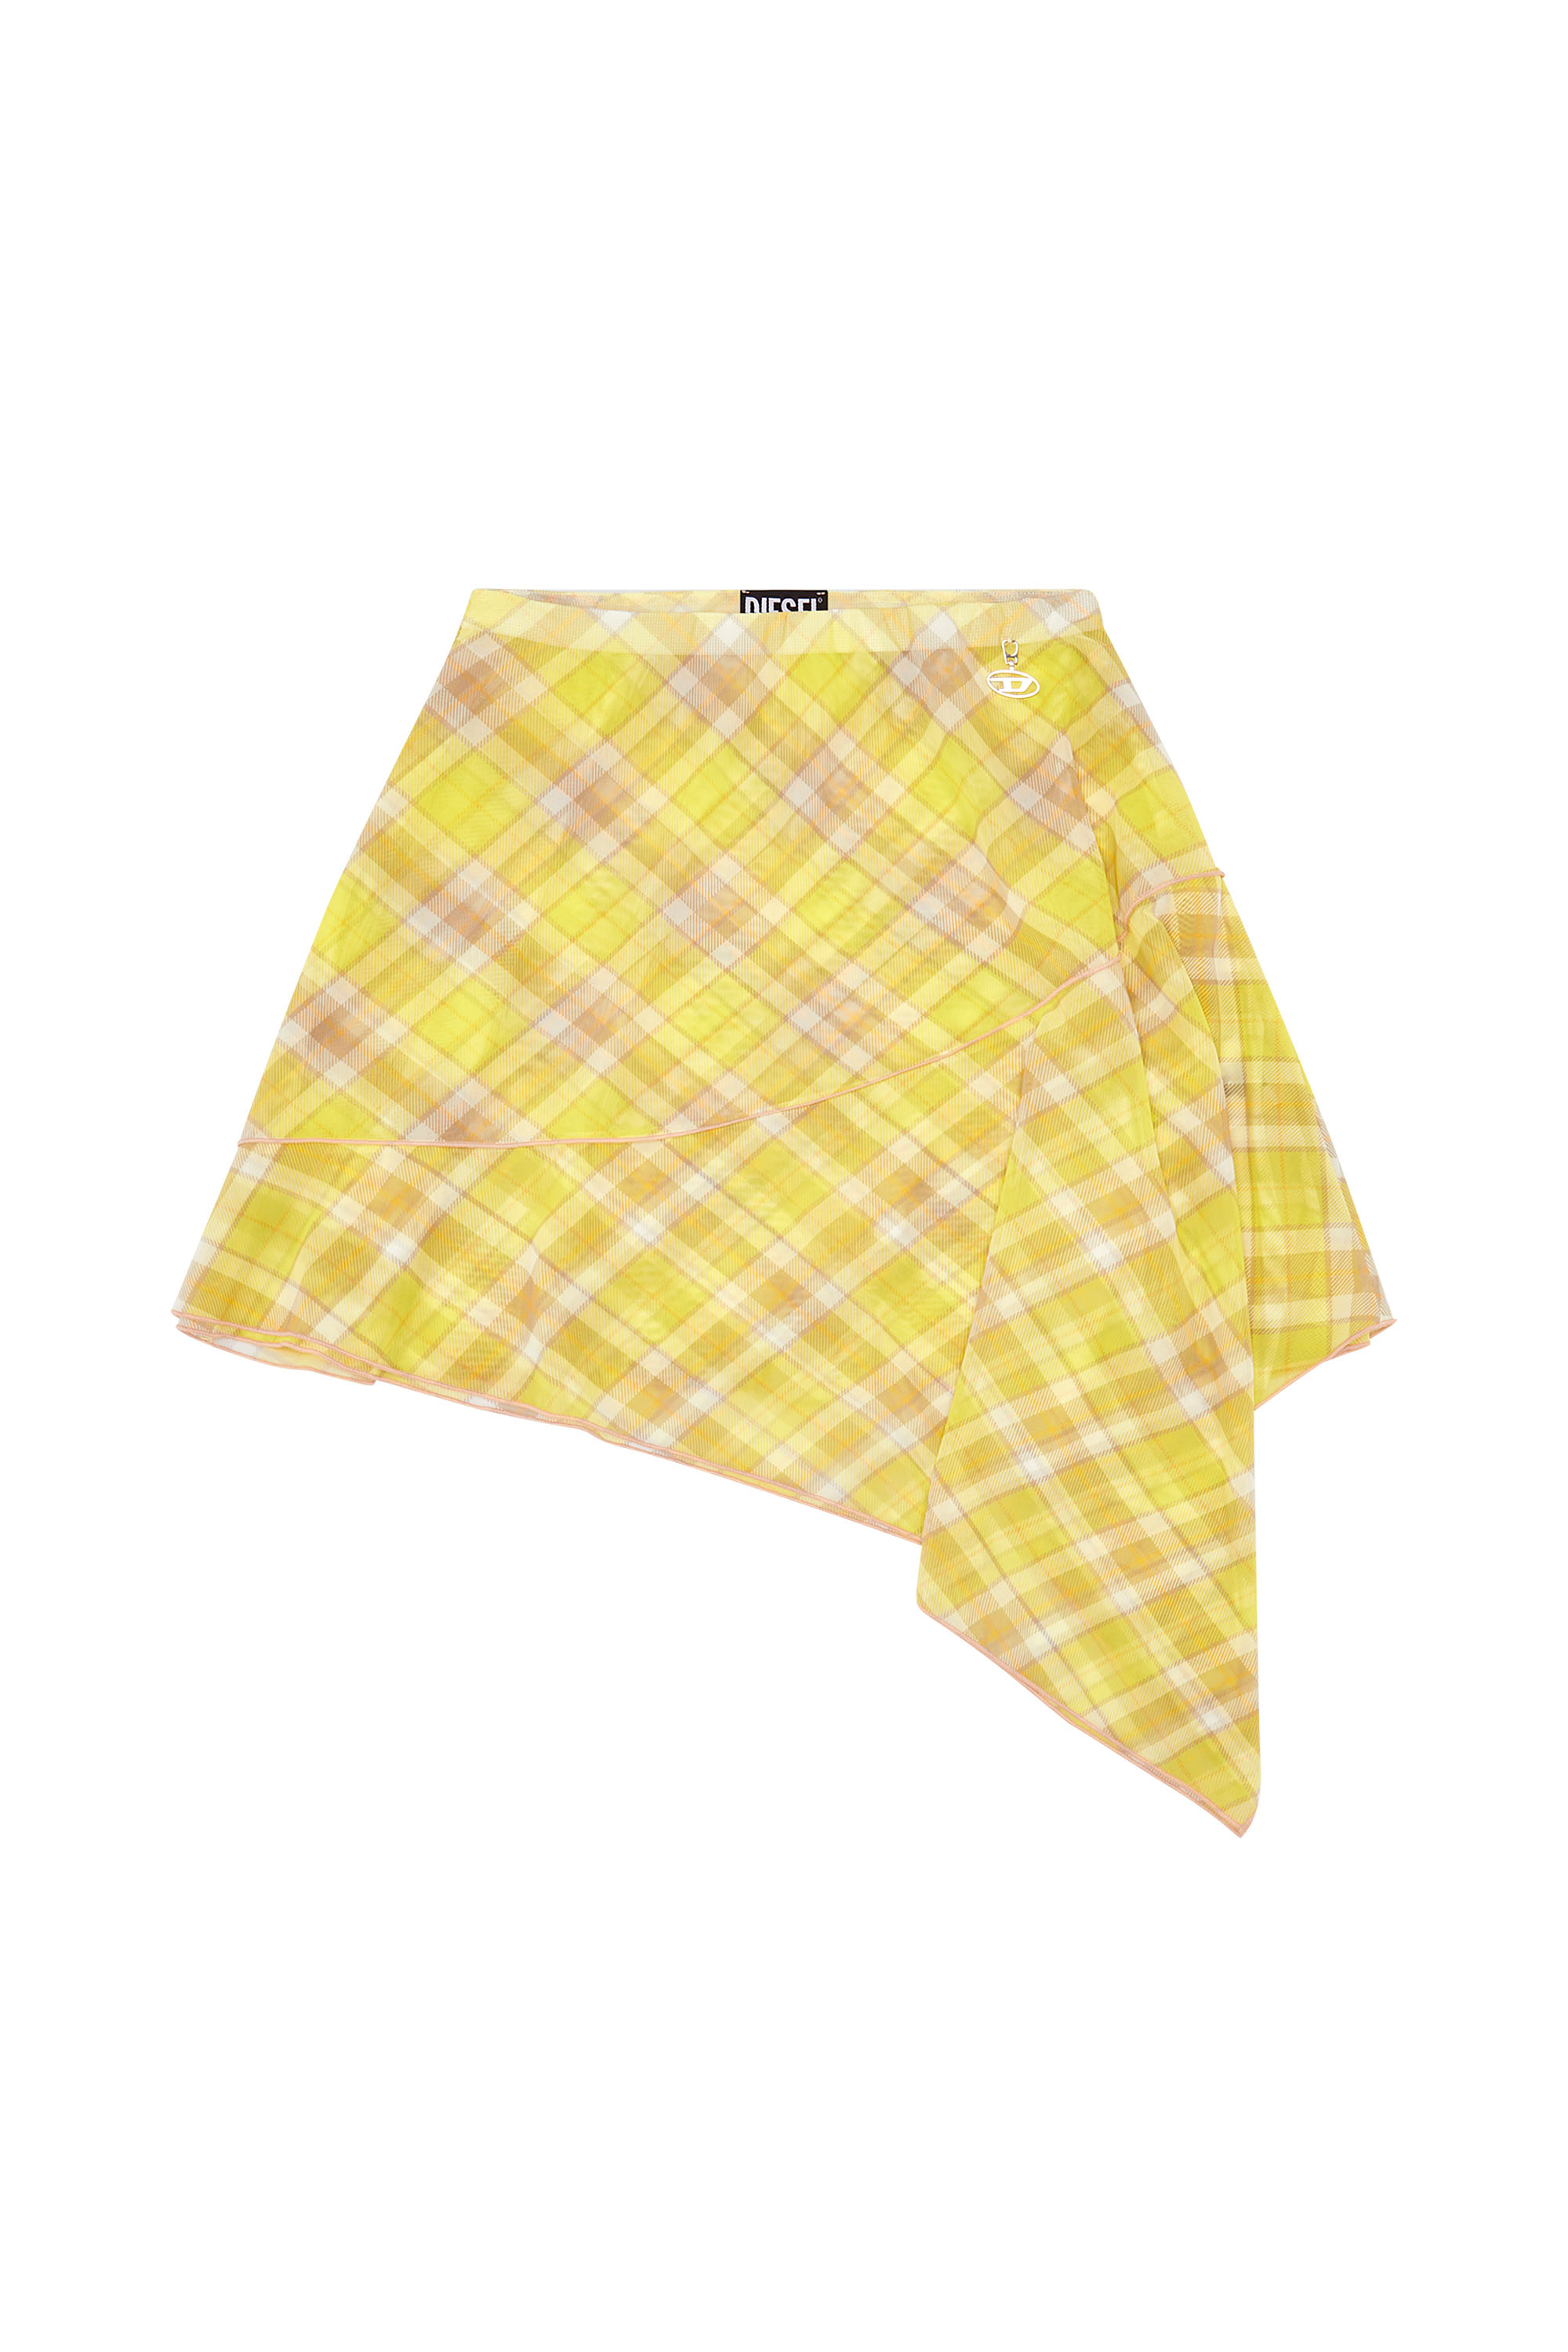 O-SALLY, Yellow - スカート